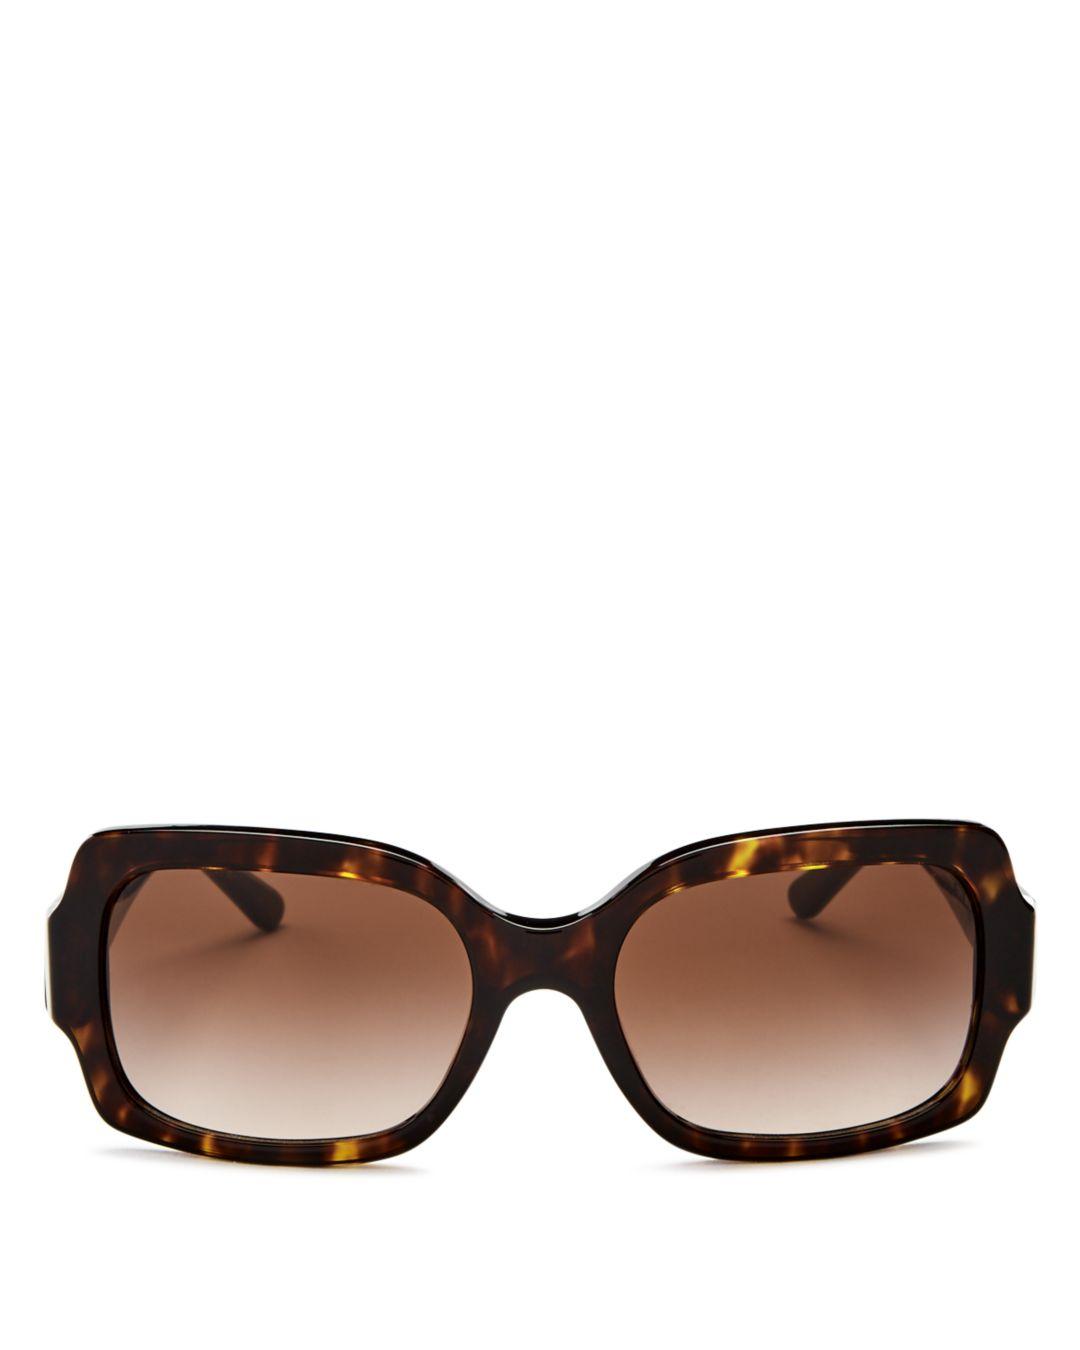 Tory Burch Square Acetate Sunglasses in Dark Tortoise (Brown) - Save 60 ...